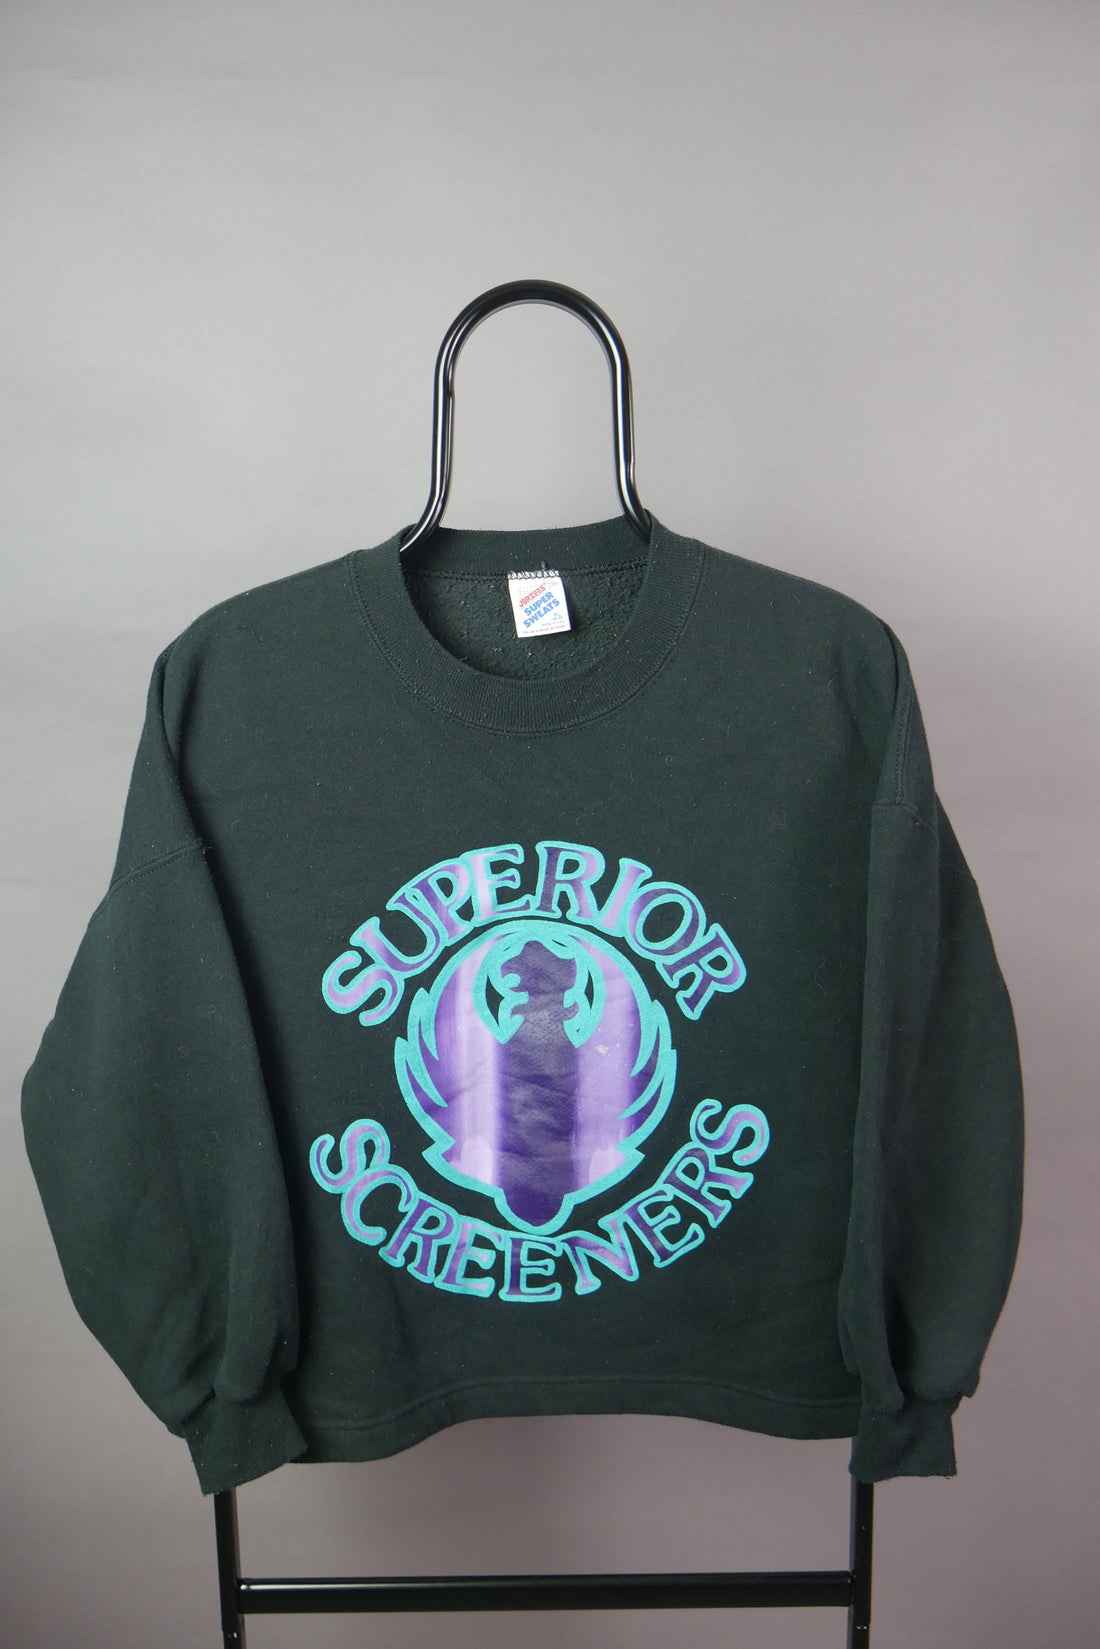 The Superior Graphic Sweatshirt (Women's XL)